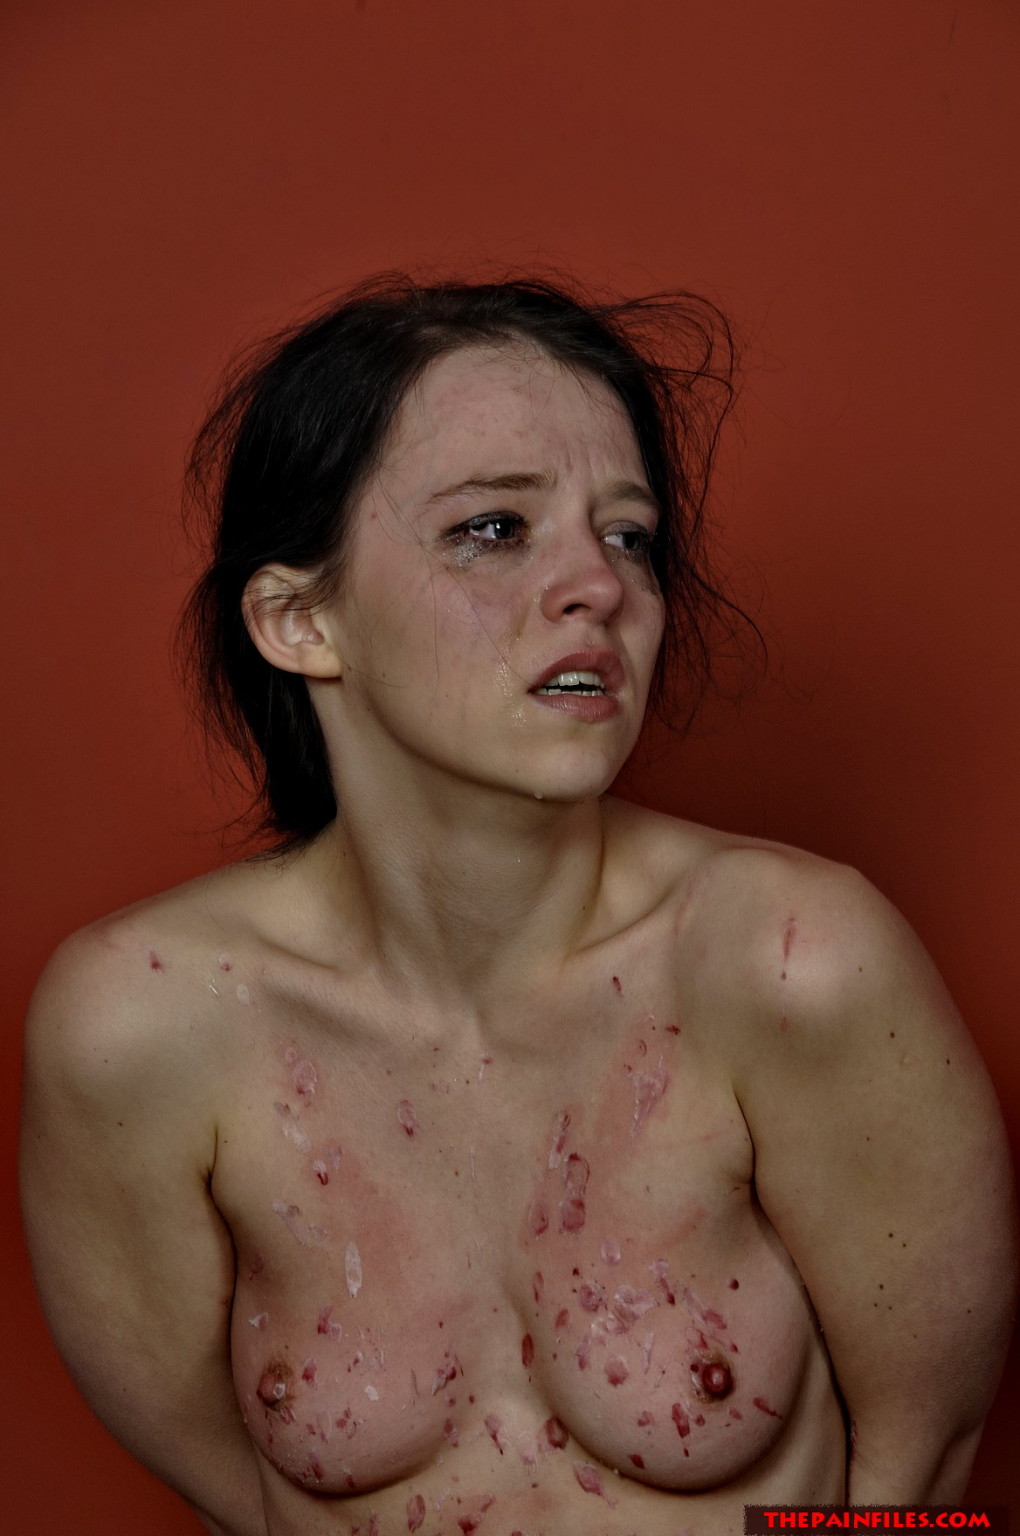 Skinny teen slaveslut Kamis whipping to tears and bruising BDSM #71907706